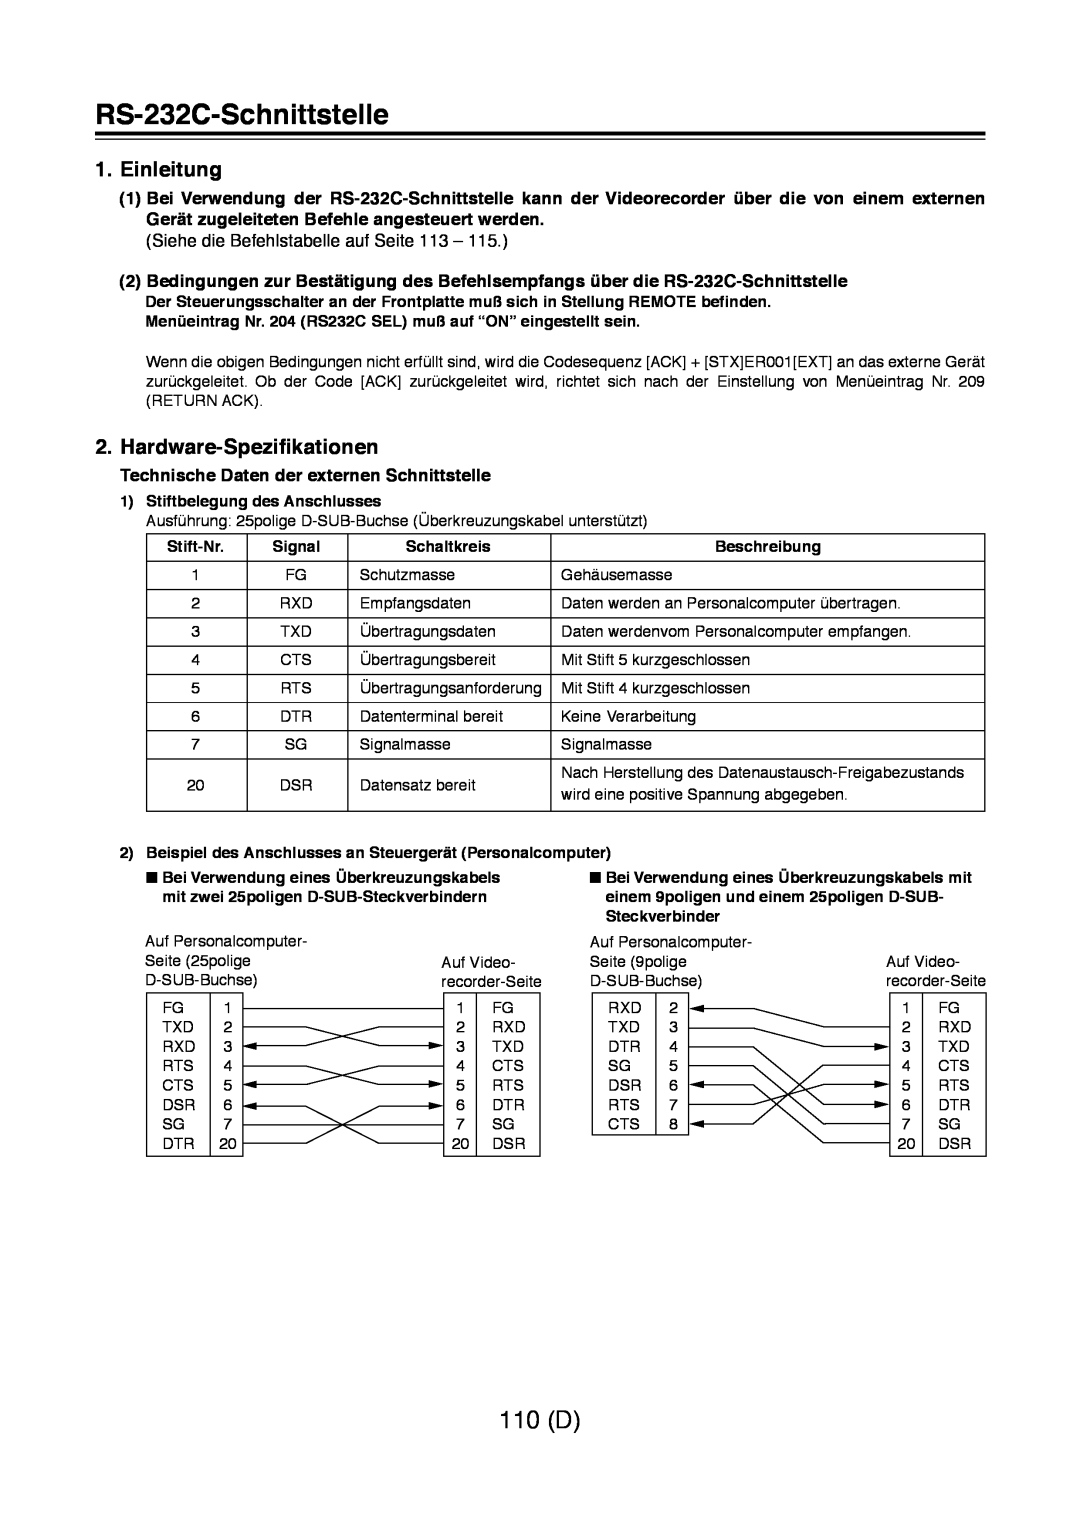 Panasonic AJ-D960 operating instructions RS-232C-Schnittstelle, 110 D, Einleitung, Hardware-Spezifikationen 